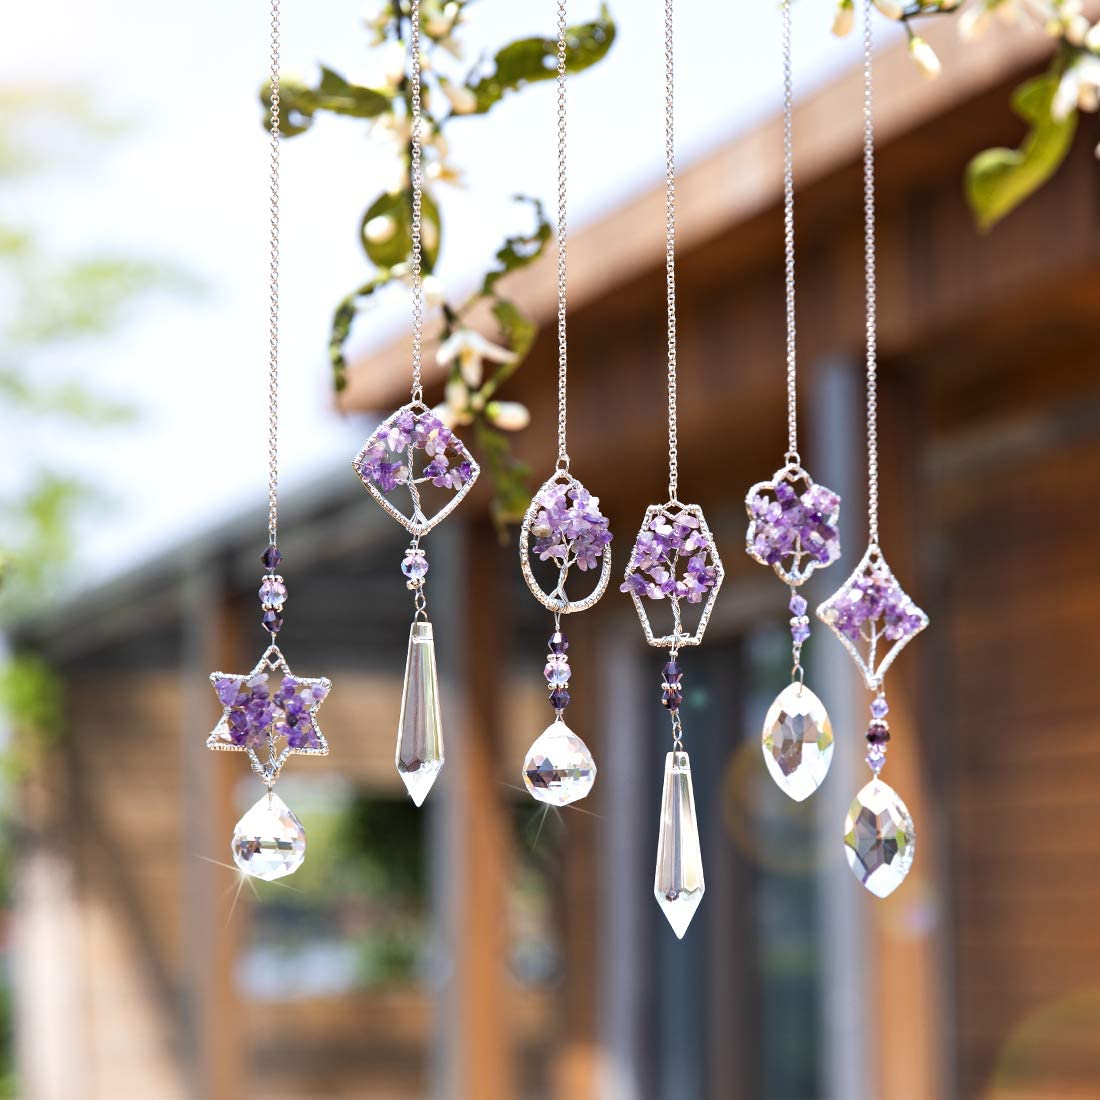 Rainbow Maker Crystal Tree of Life Suncatcher Hanging Chakra Glass Pendant Decor for Home Window Car Garden, 6PCS